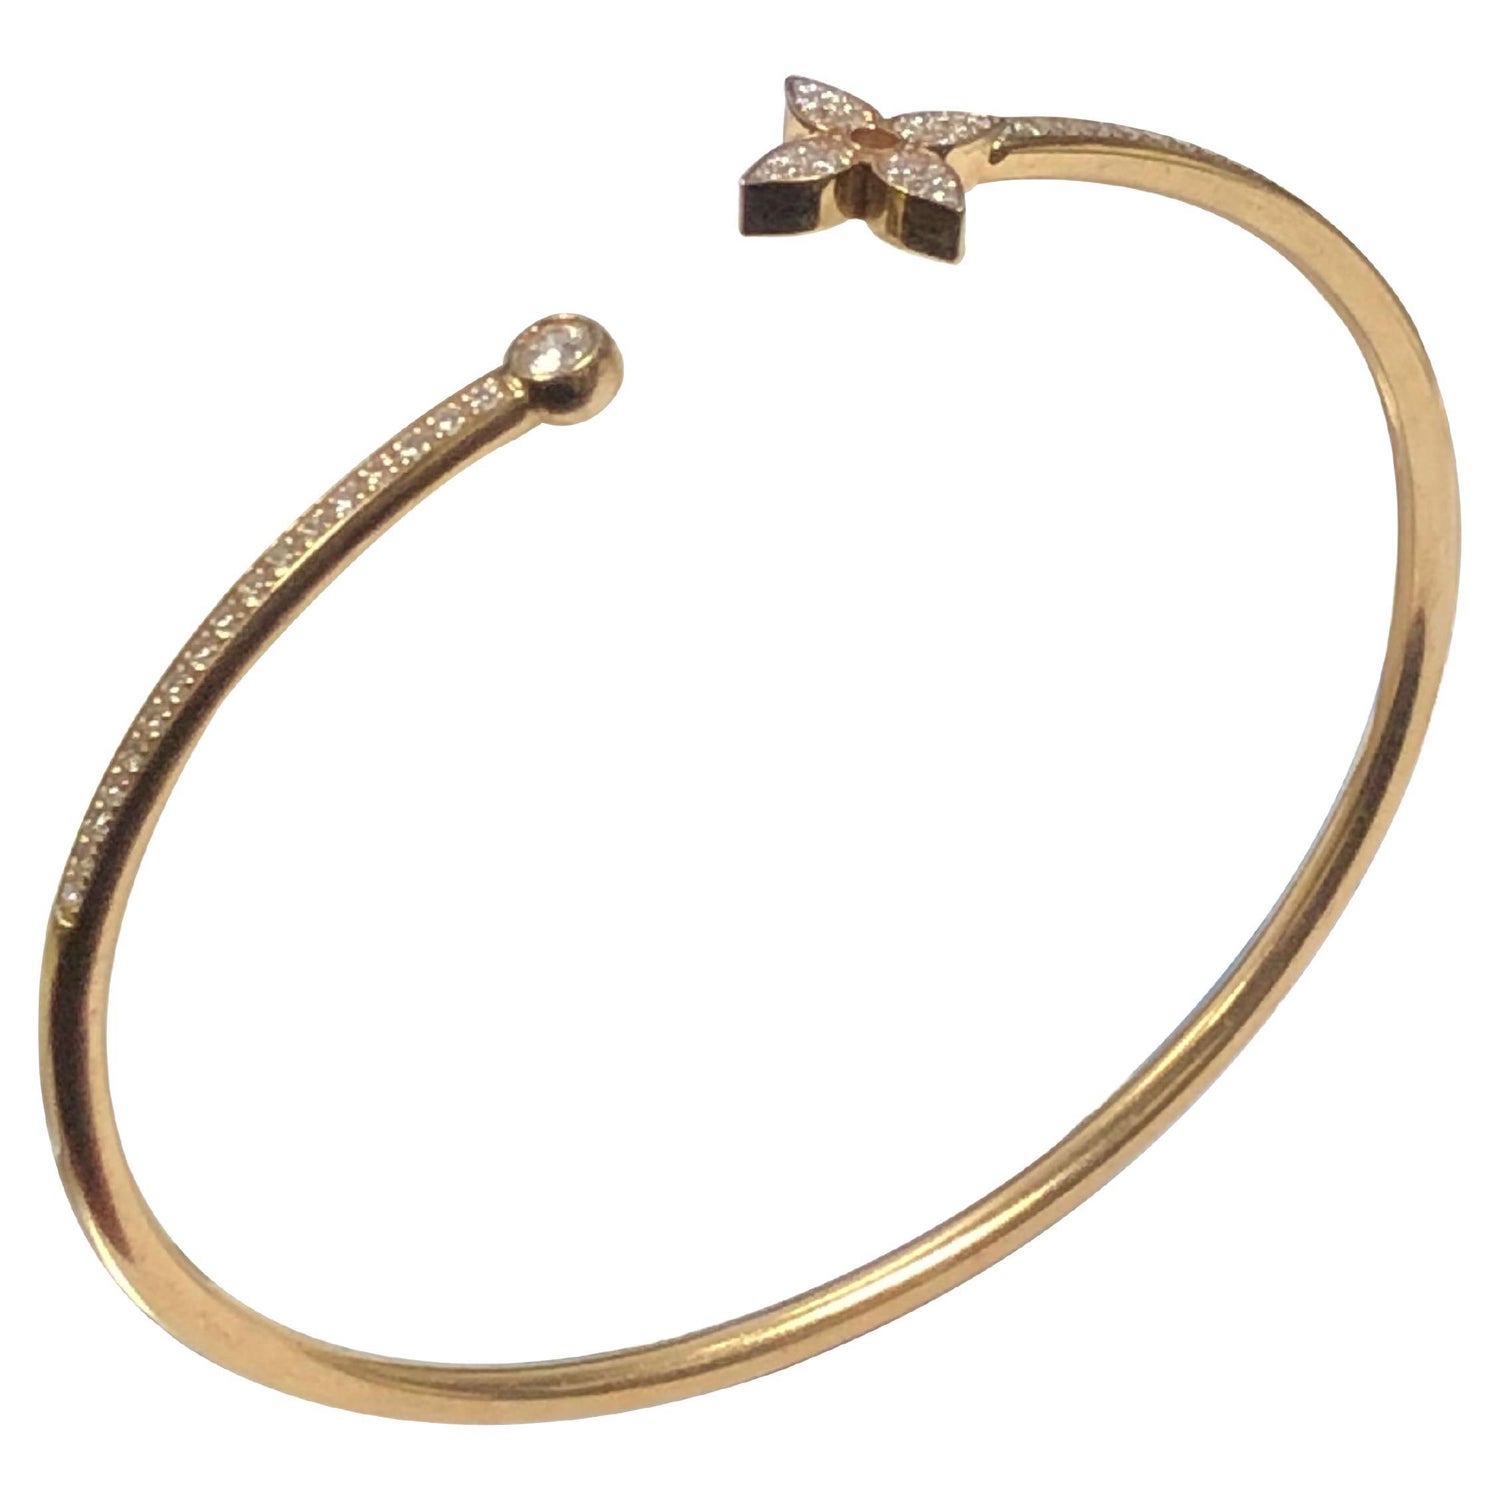 Louis Vuitton® Idylle Blossom Bracelet, Pink Gold And Diamonds